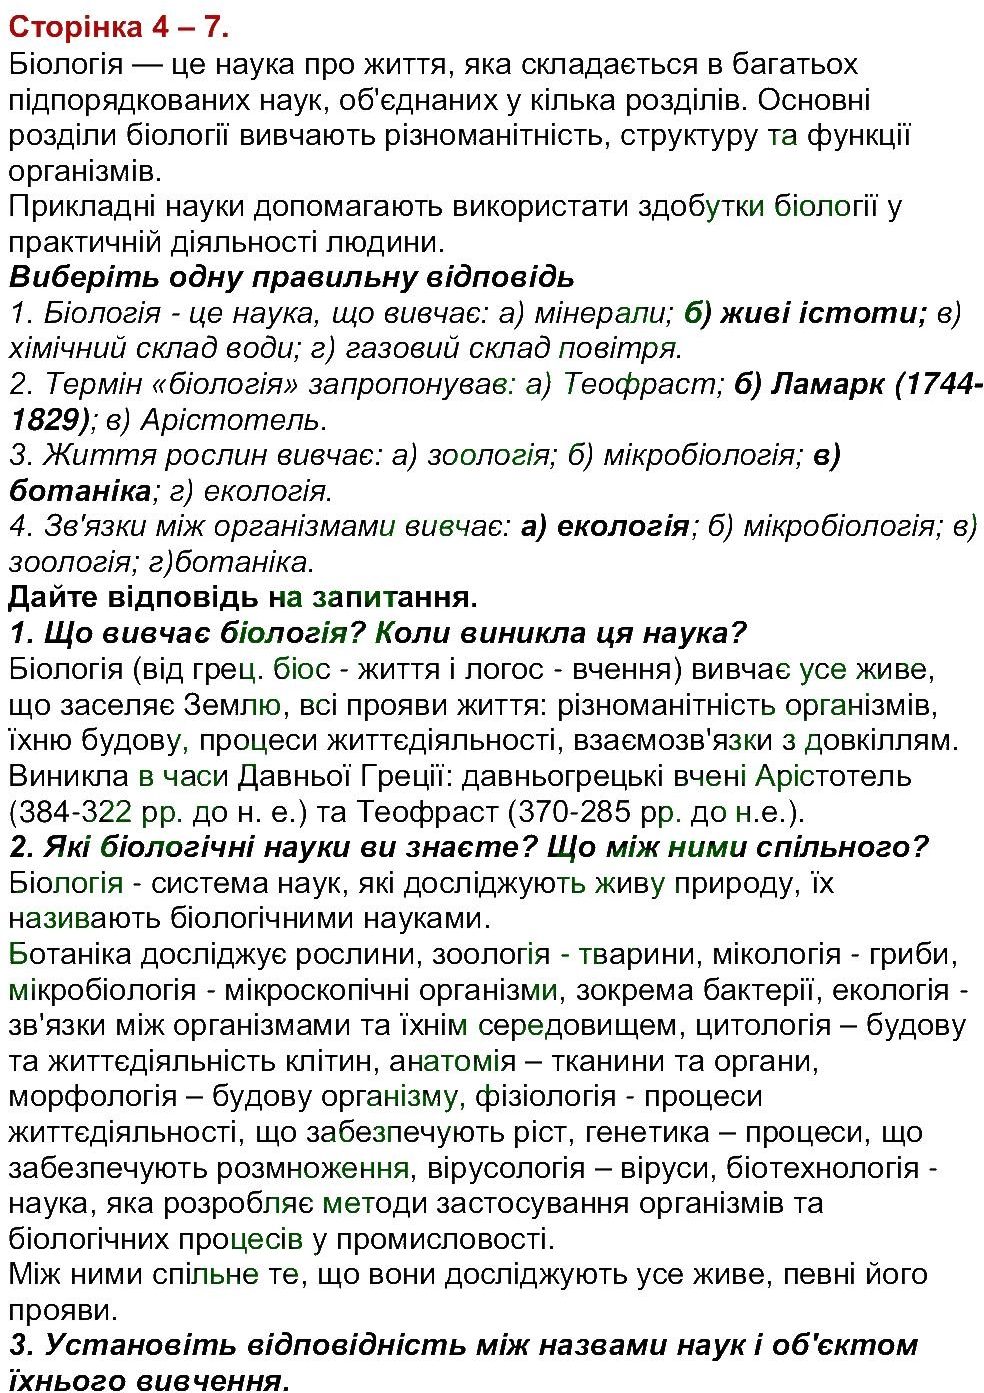 6-biologiya-li-ostapchenko-pg-balan-nyu-matyash-2016--vstup-ст4-7.jpg